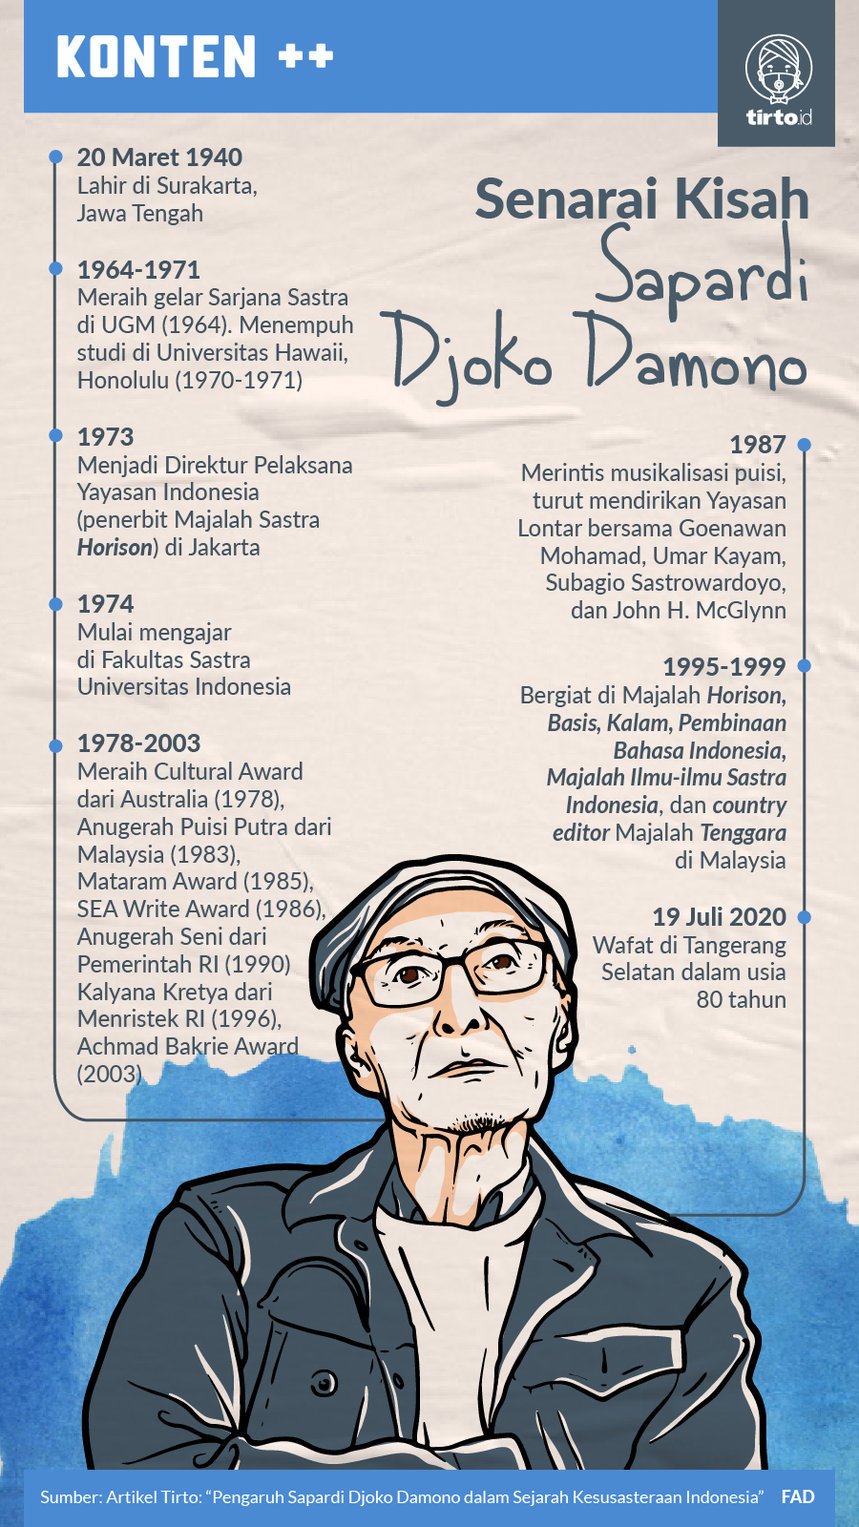 Infografik Senarai Kisah Sapardi Djoko Damono